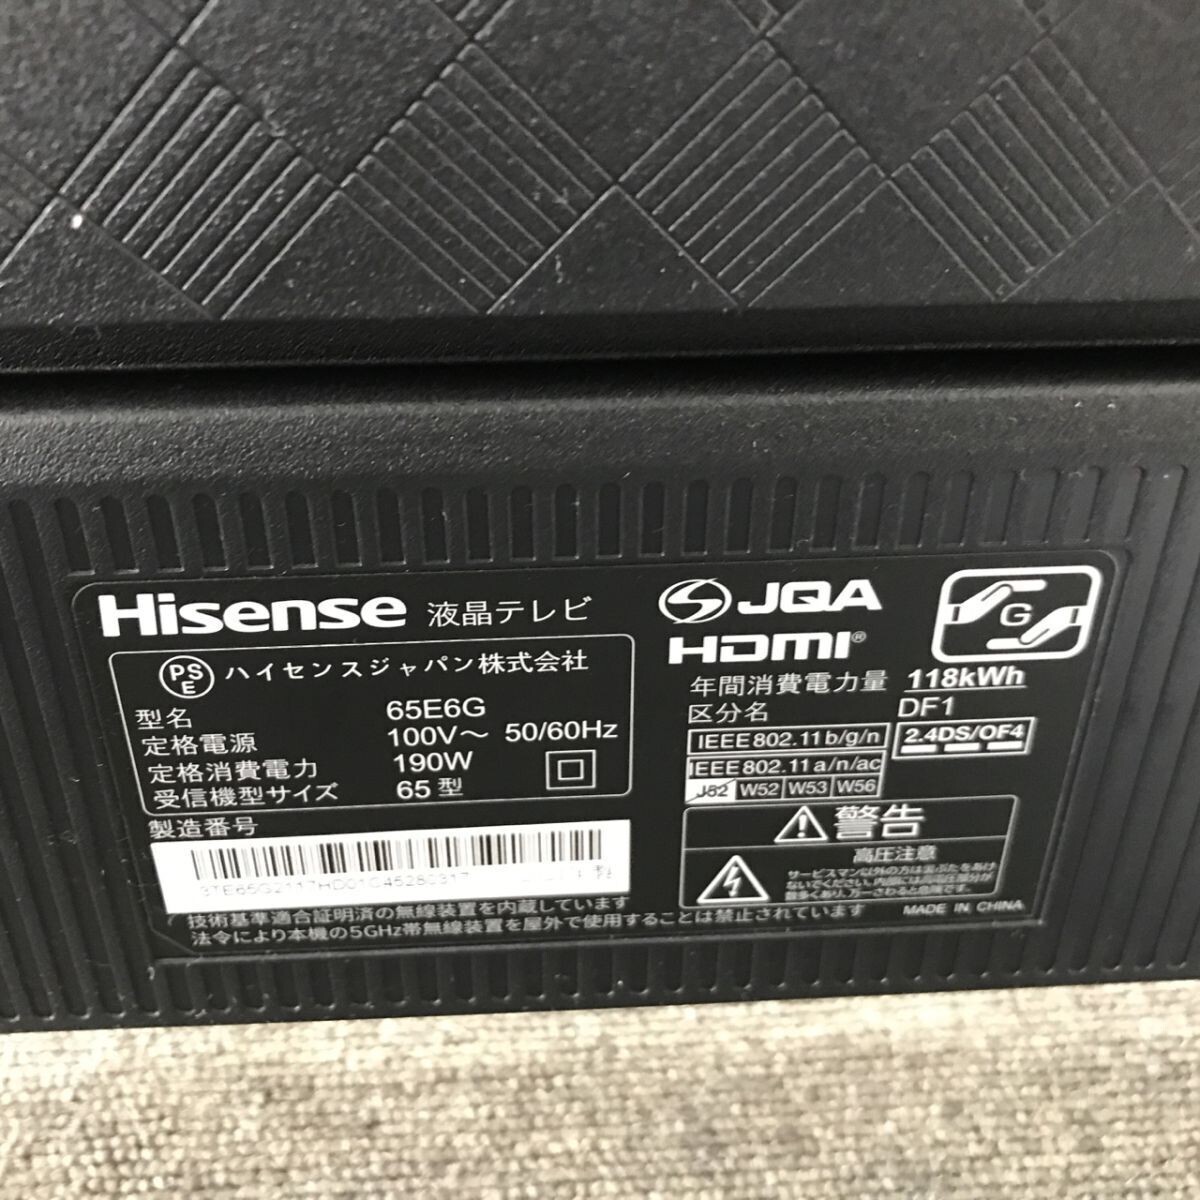 Hisense ハイセンス 65V型 液晶テレビ 4Kチューナー内蔵 65E6G 2021年製 ネット動画対応 ADSパネル [C3499]の画像6